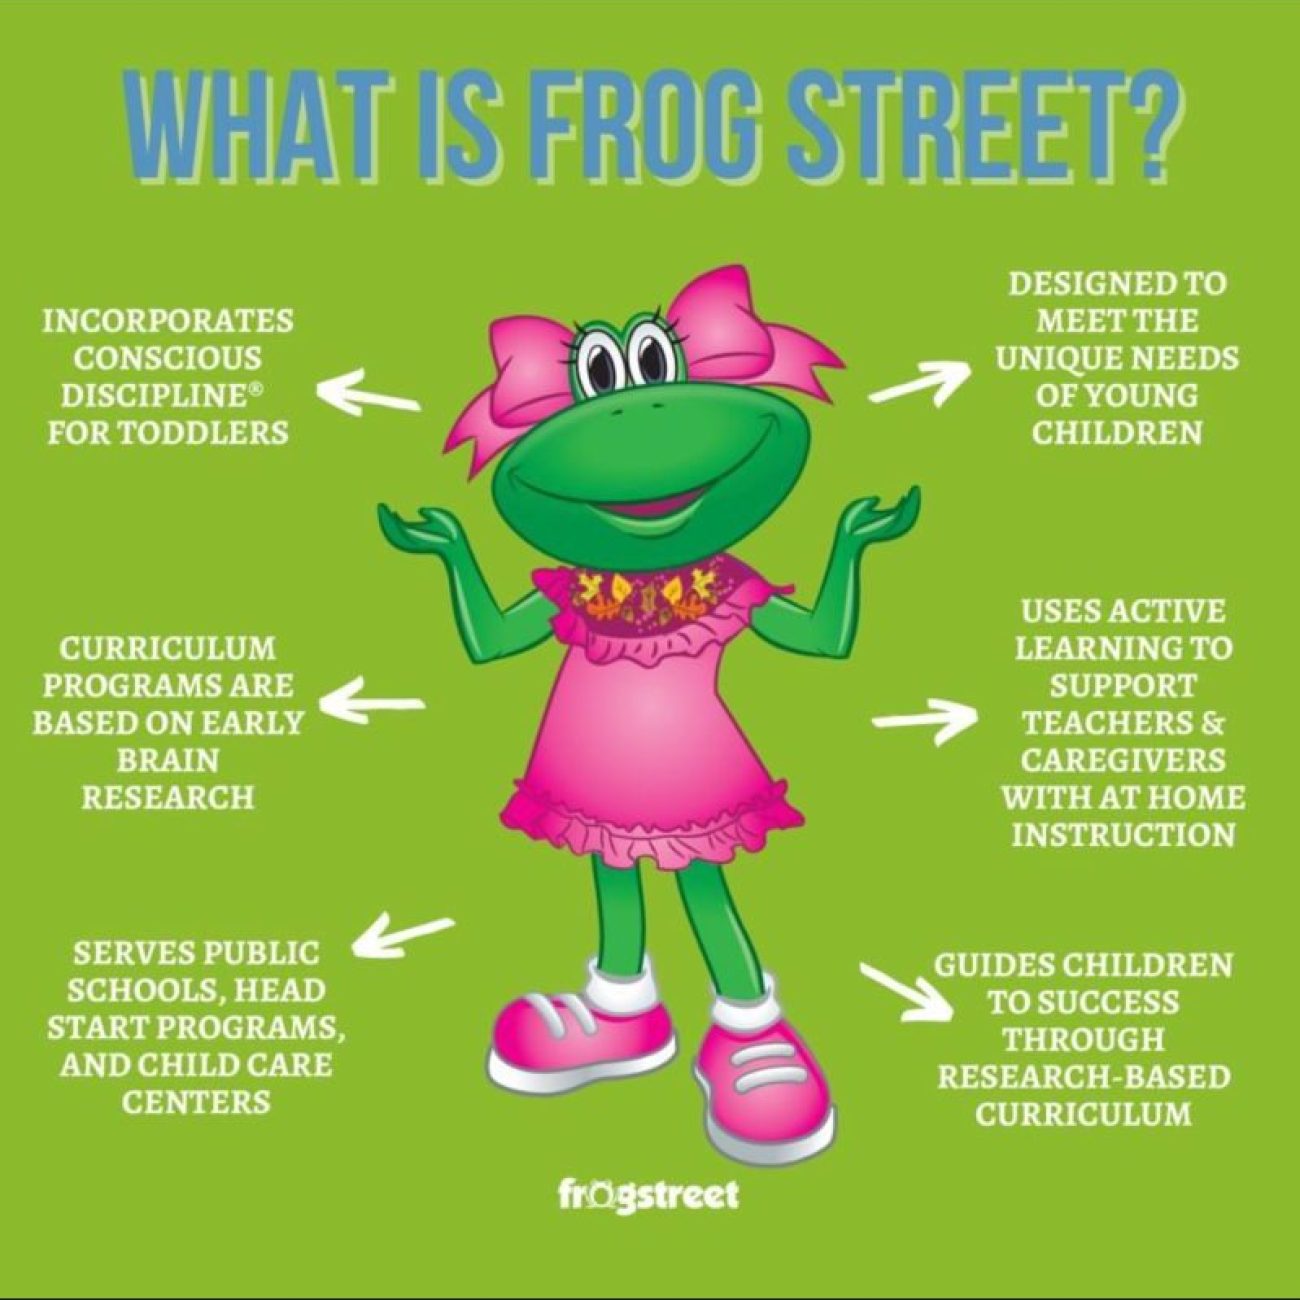 Frogstreet